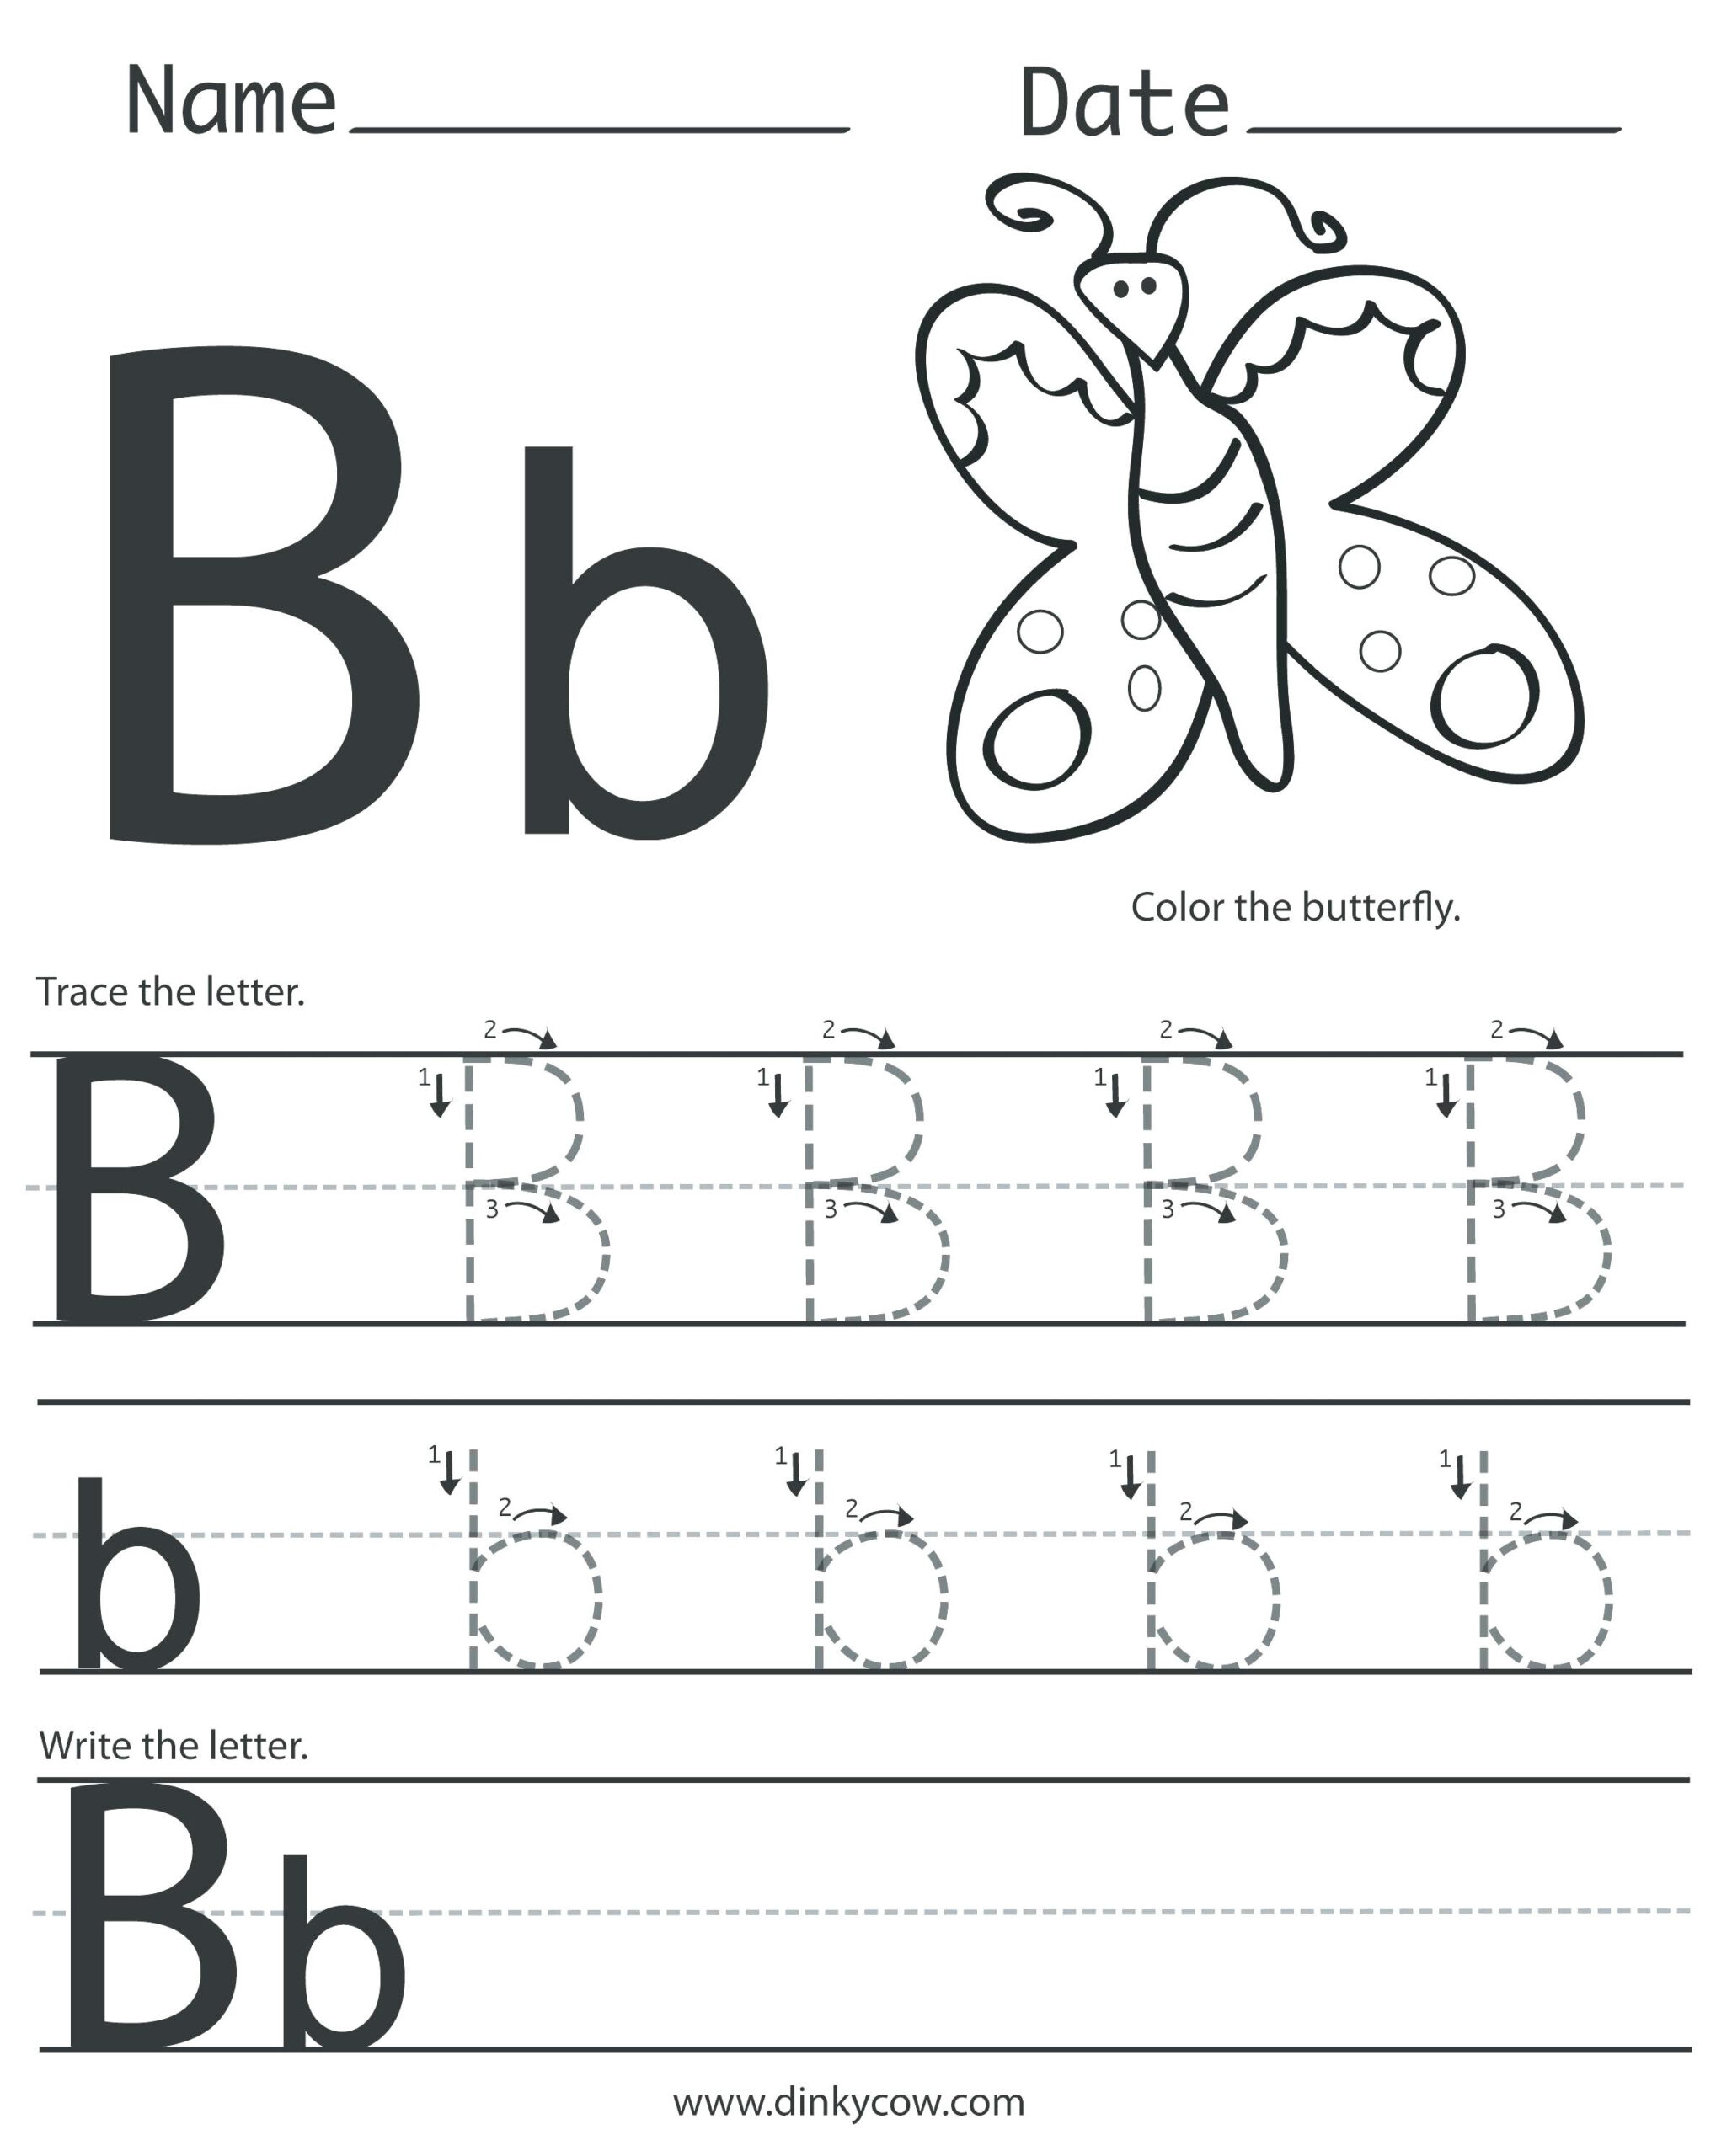 trace-letter-b-worksheets-preschool-tracinglettersworksheets